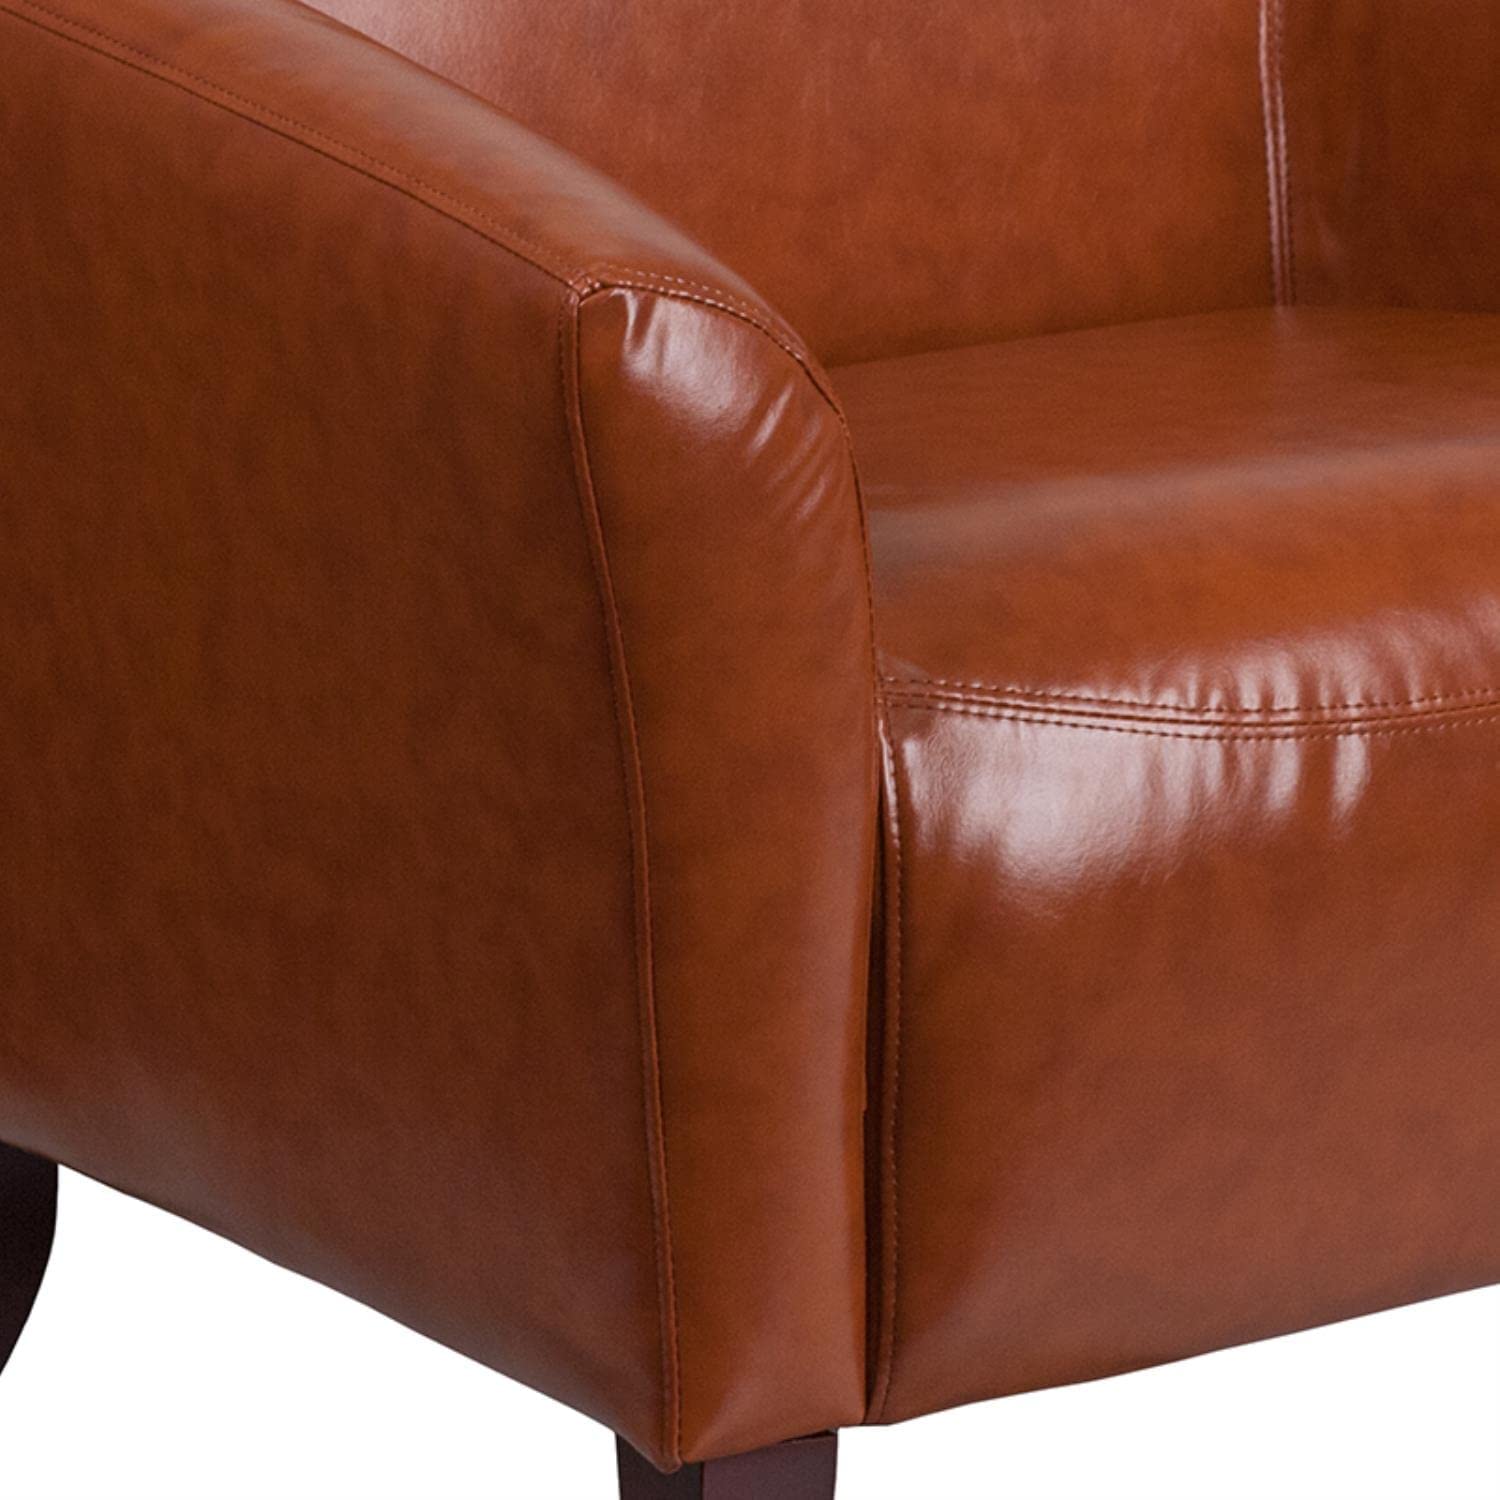 Flash Furniture HERCULES Imperial Series Cognac LeatherSoft Loveseat